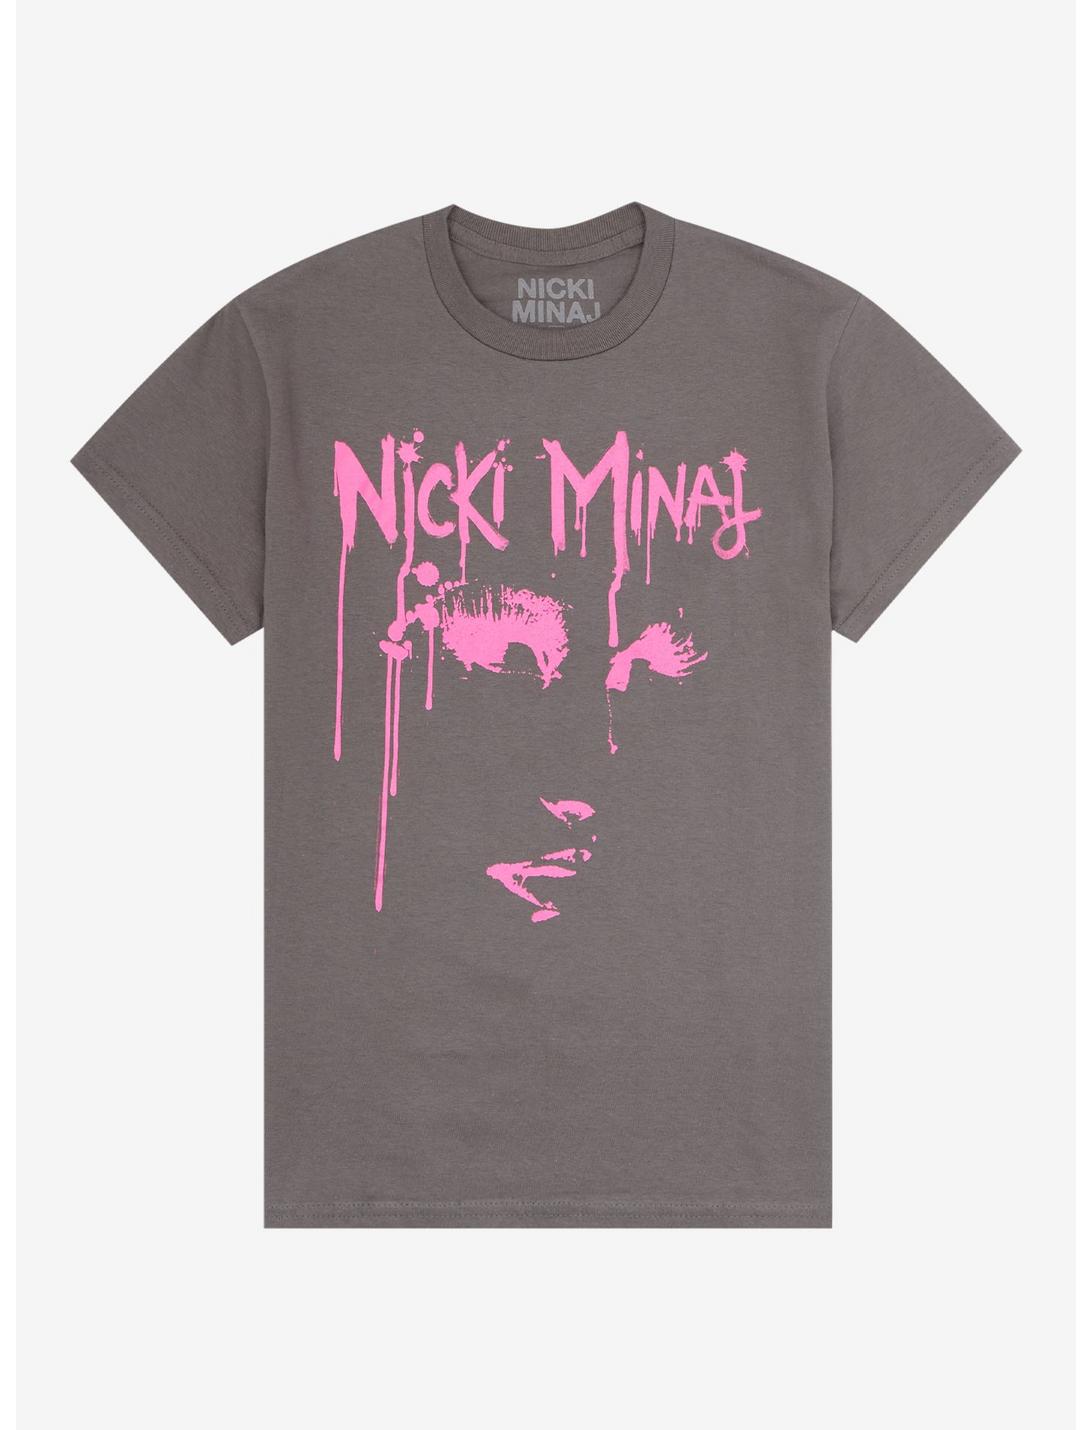 Nicki Minaj Pink Paint Boyfriend Fit Girls T-Shirt, CHARCOAL, hi-res